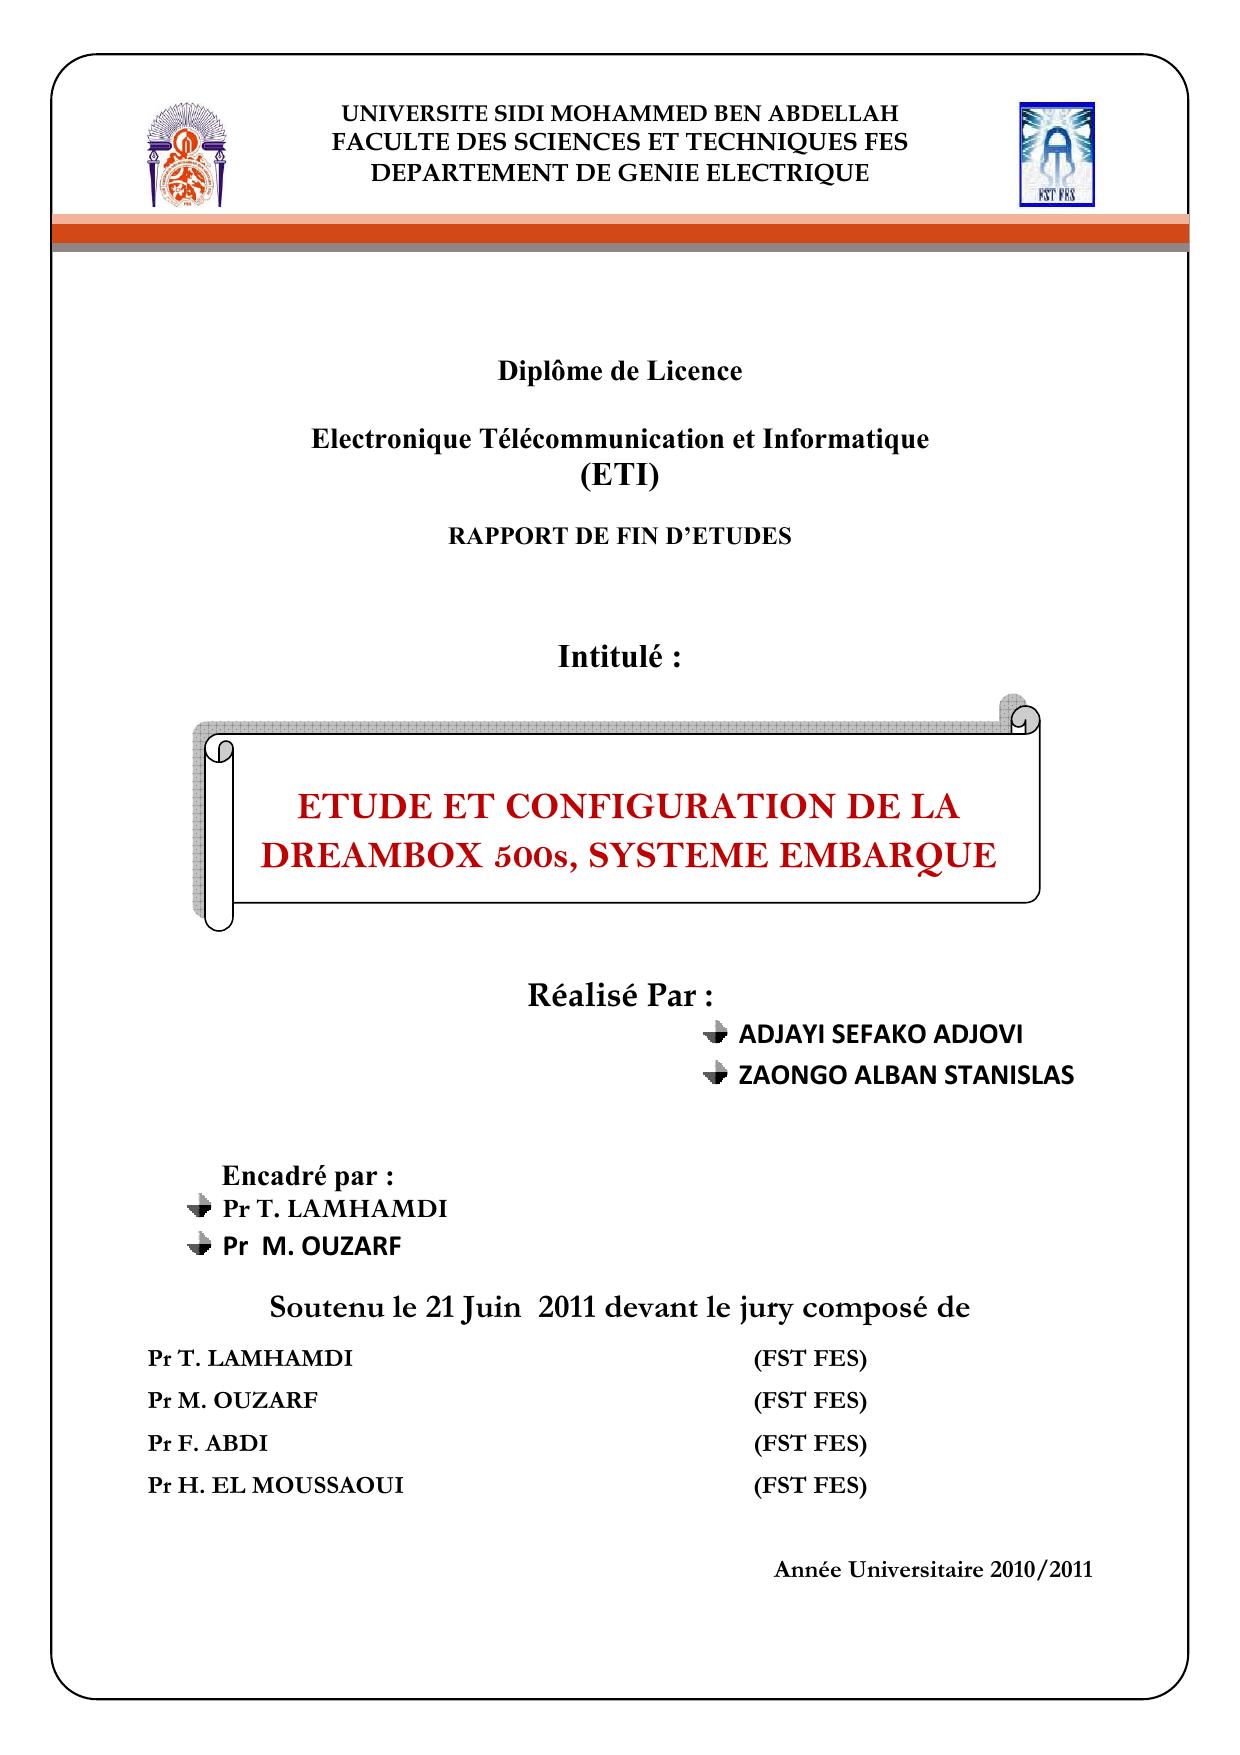 ETUDE ET CONFIGURATION DE LA DREAMBOX 500s, SYSTEME EMBARQUE